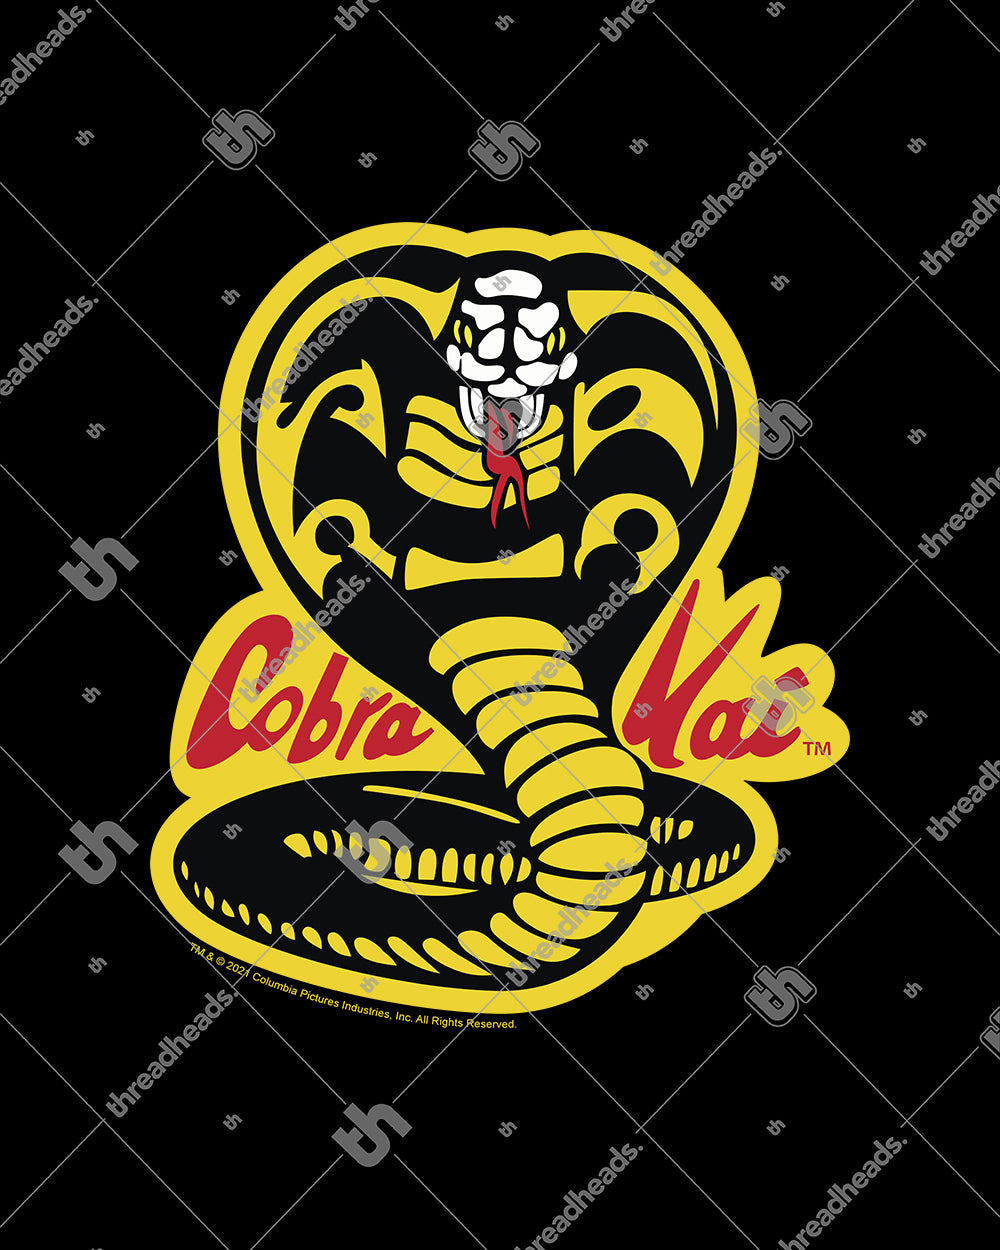 Buy Cobra Kai Logo Karate Kid Movie Vinyl Sticker Decal Outside Inside  Using for Laptops Water Bottles Cars Trucks Bumpers Walls, 4